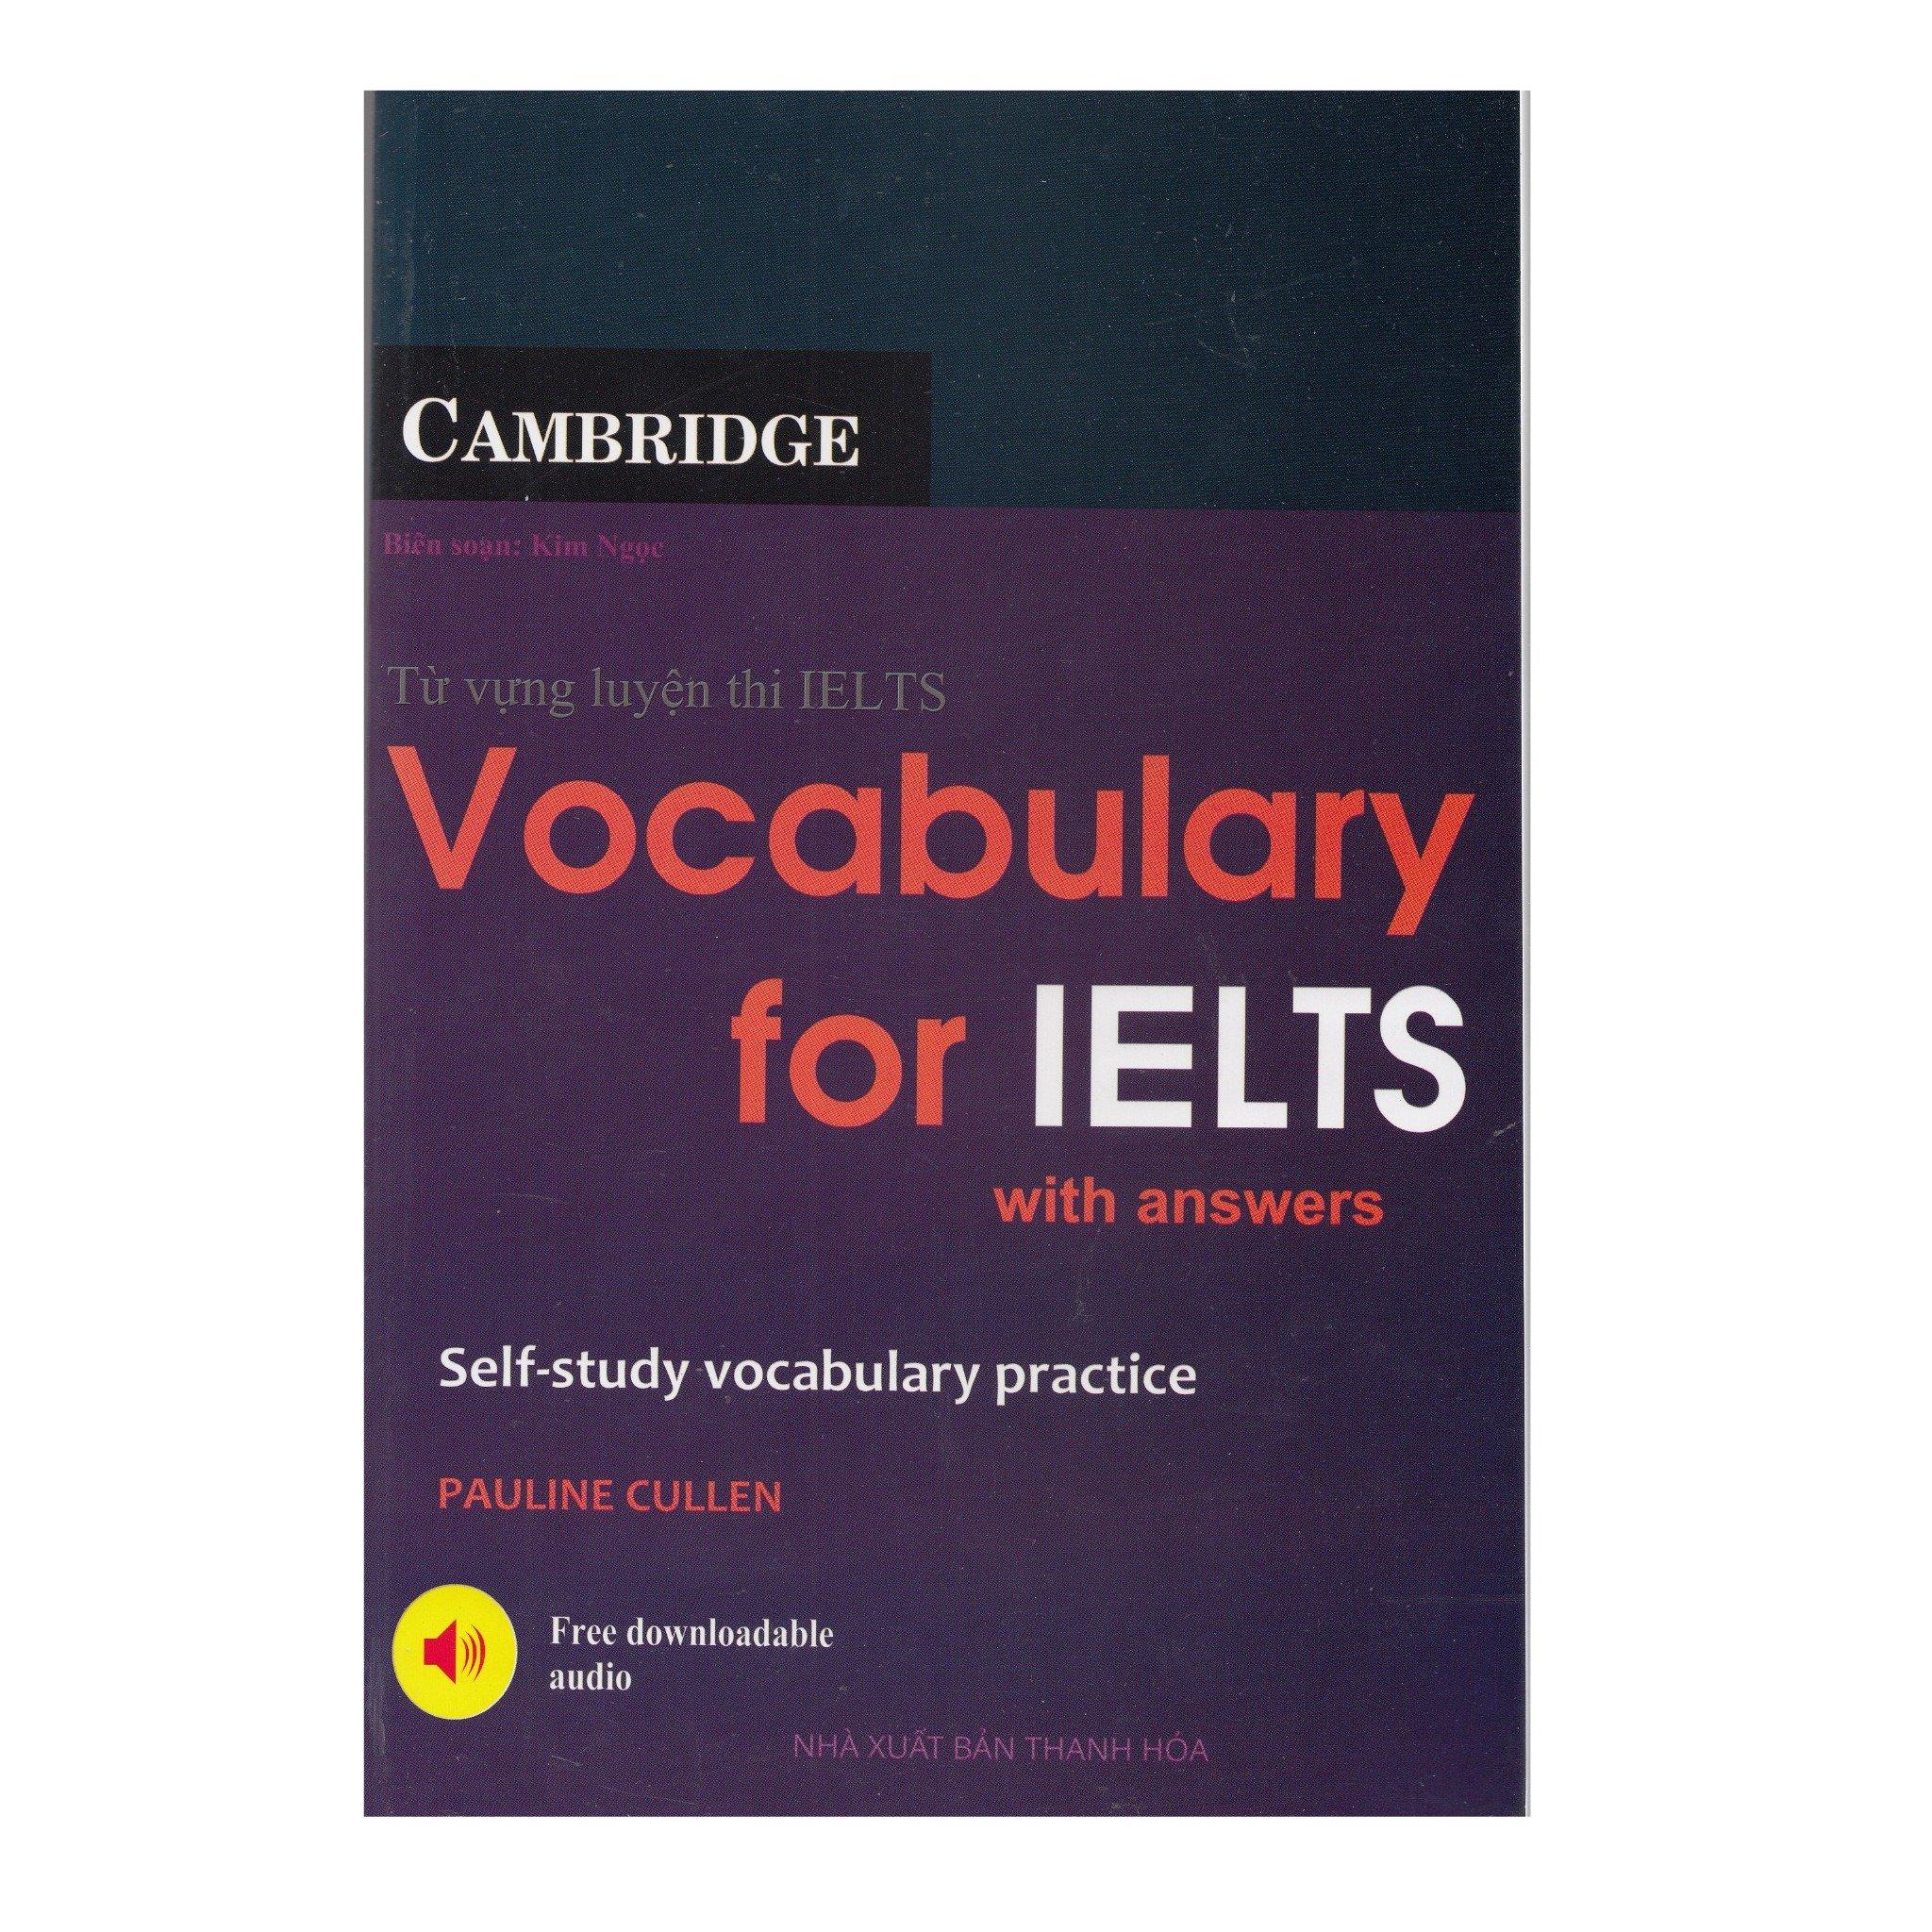 Vocabulary For IELTS – Từ Vựng Luyện Thi IELTS